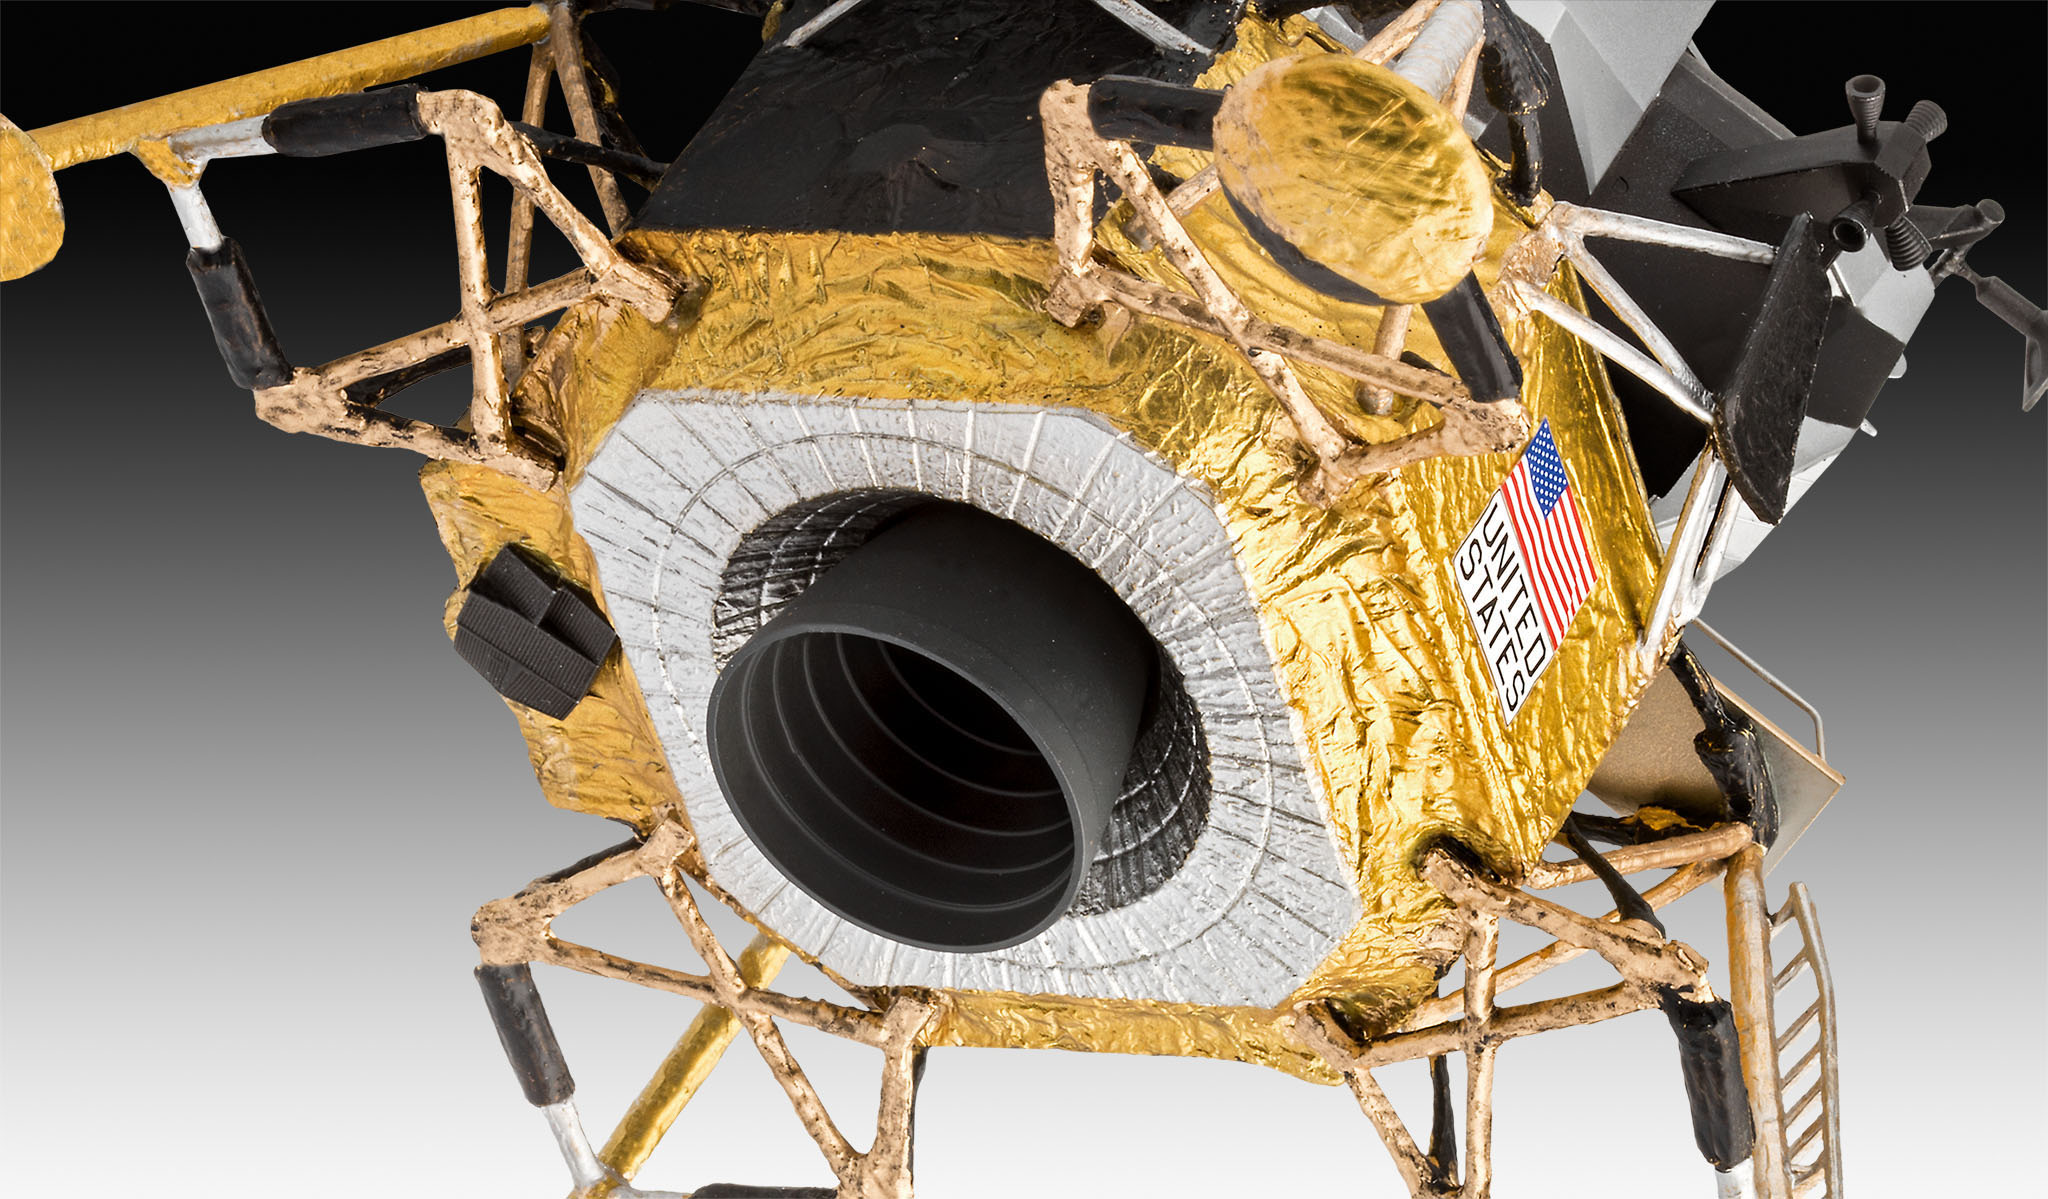 REVELL Apollo Module Eagle Lunar 11 Mehrfarbig Bausatz